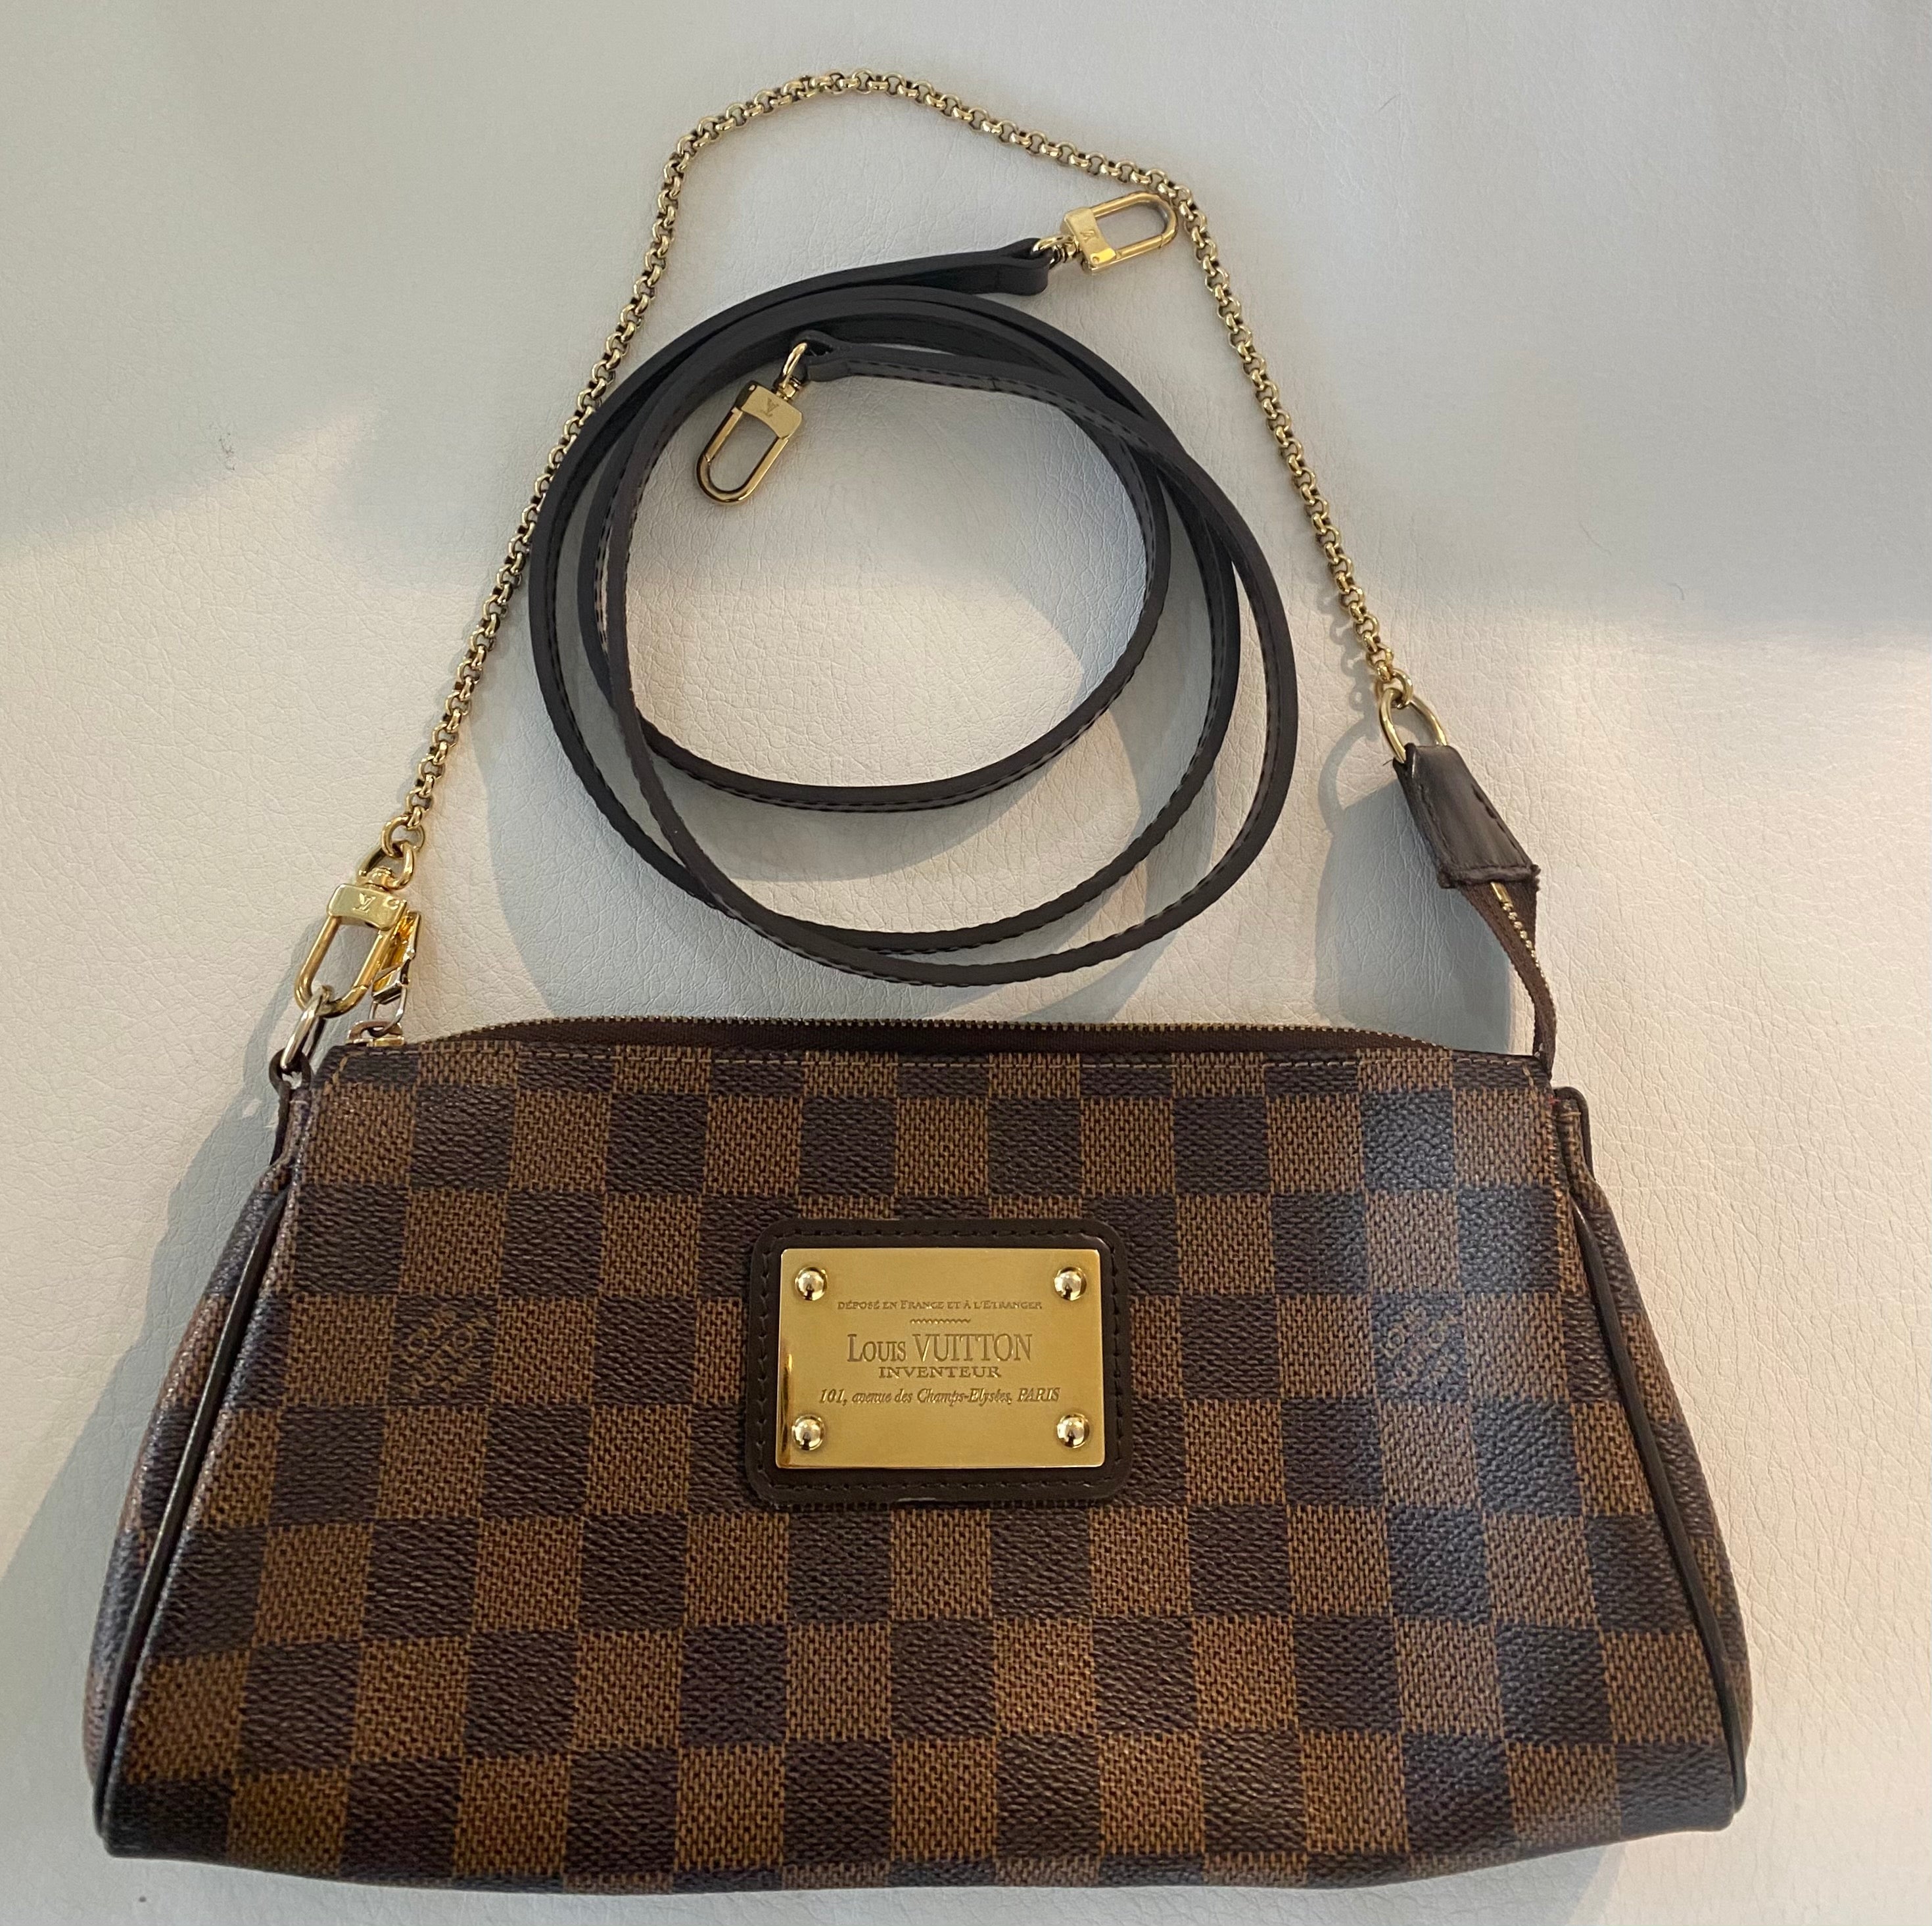 Louis Vuitton handbags prices in Canada